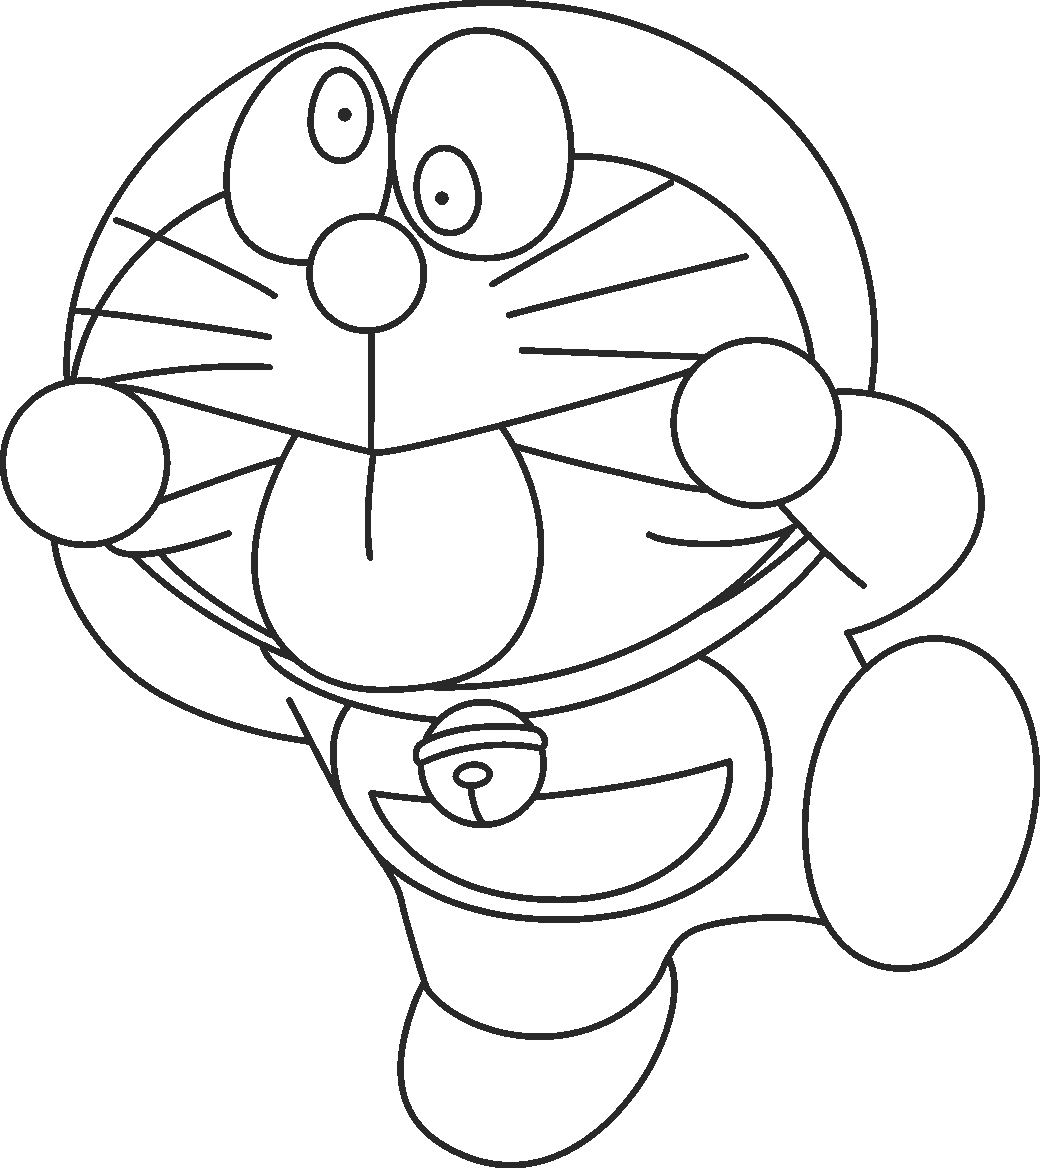 Gambar Mewarnai Doraemon Gambar Mewarnai Lucu